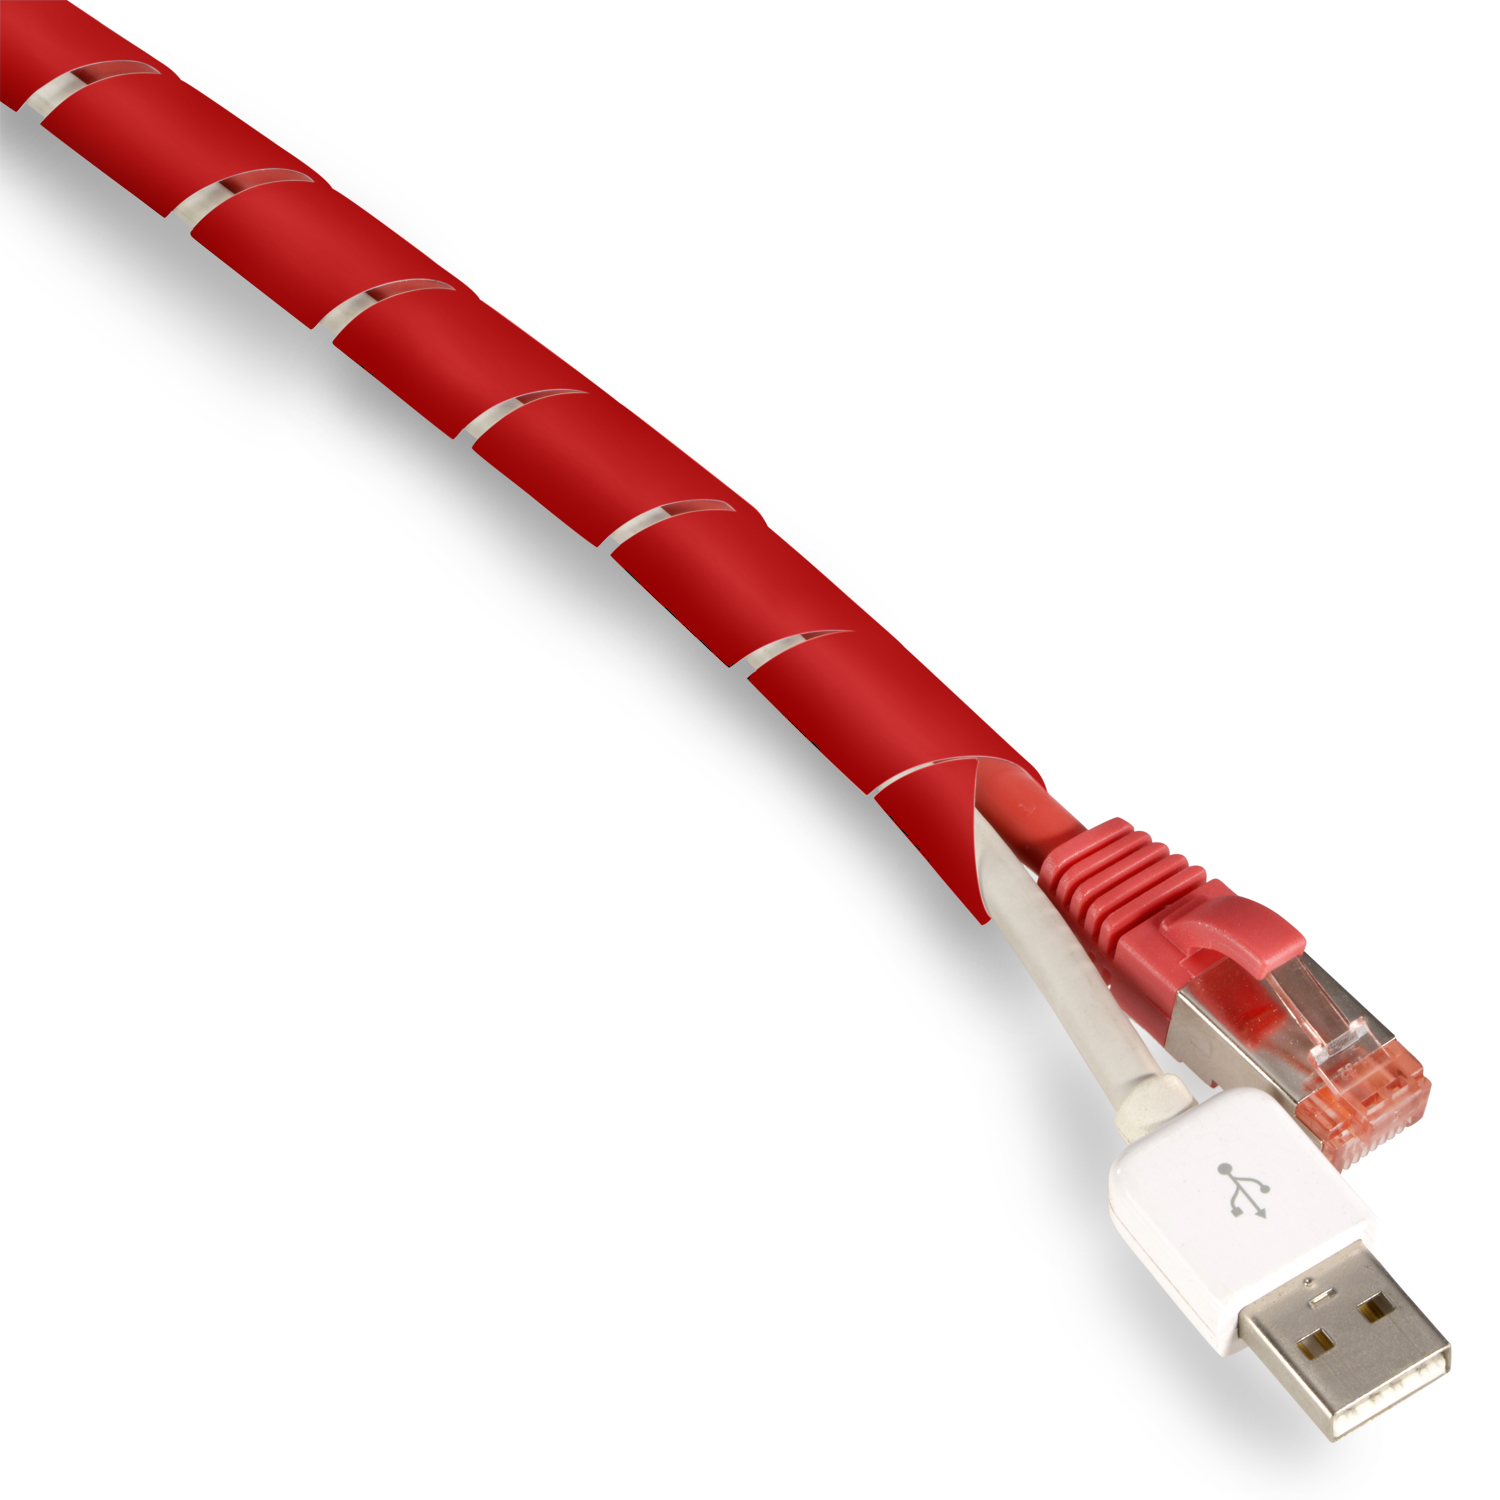 TPFNET 3er Pack Premium Spiral-Kabelschlauch Rot Kabelschlauch, 20-130mm, 10m Rot